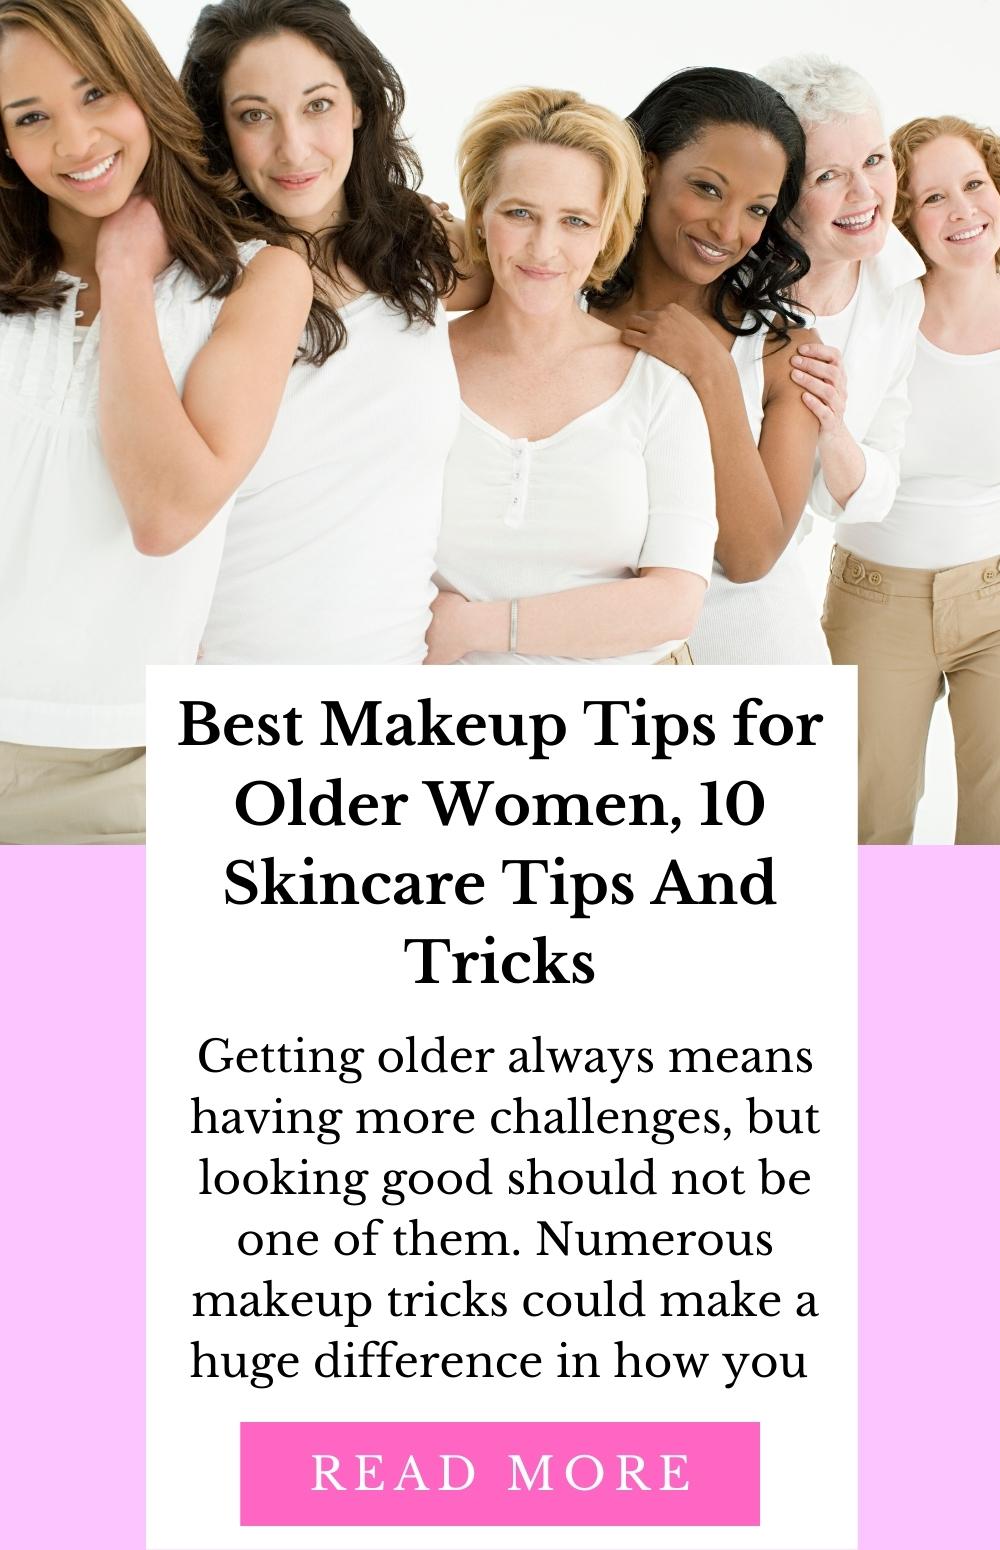 10 Best Makeup Tips for Older Women - TGC Boutique